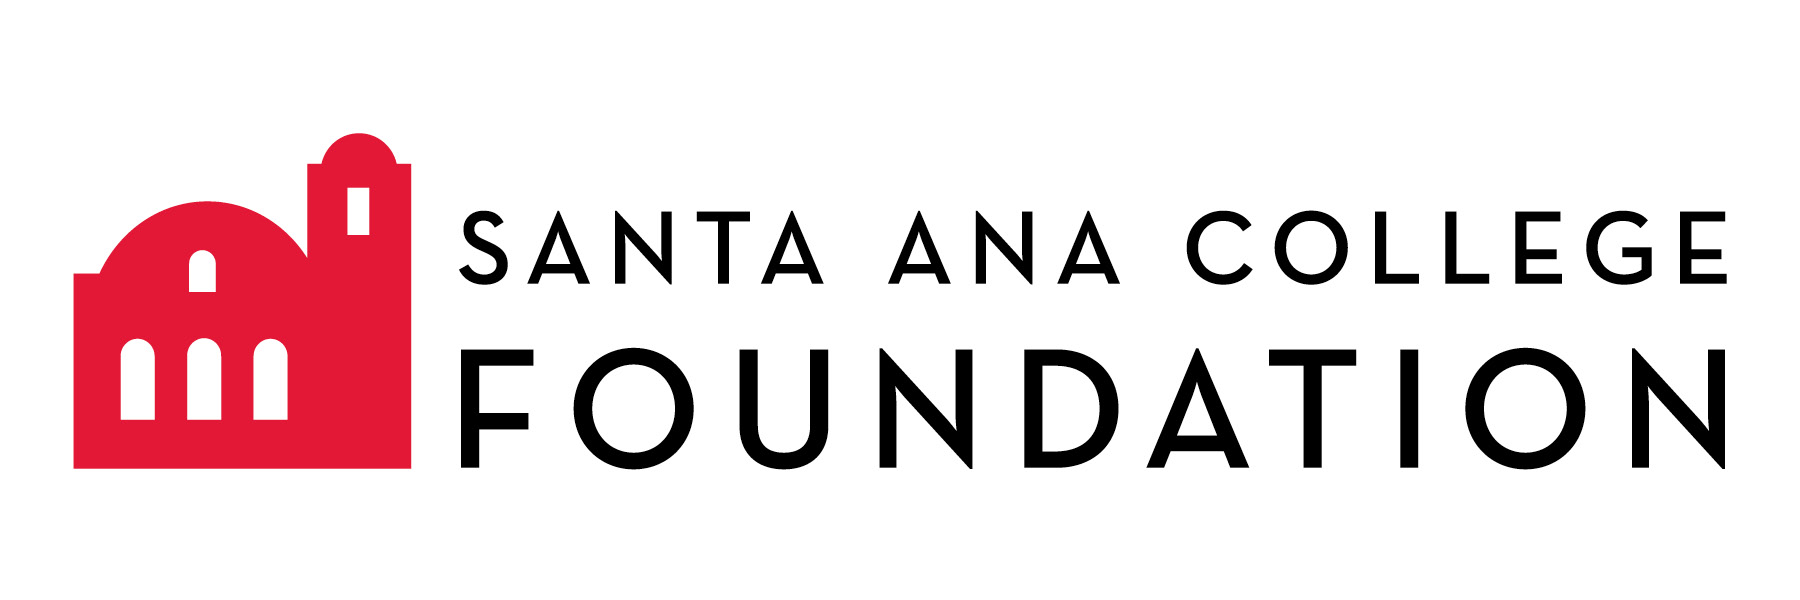 Foundation_Logo_2017_red.jpg